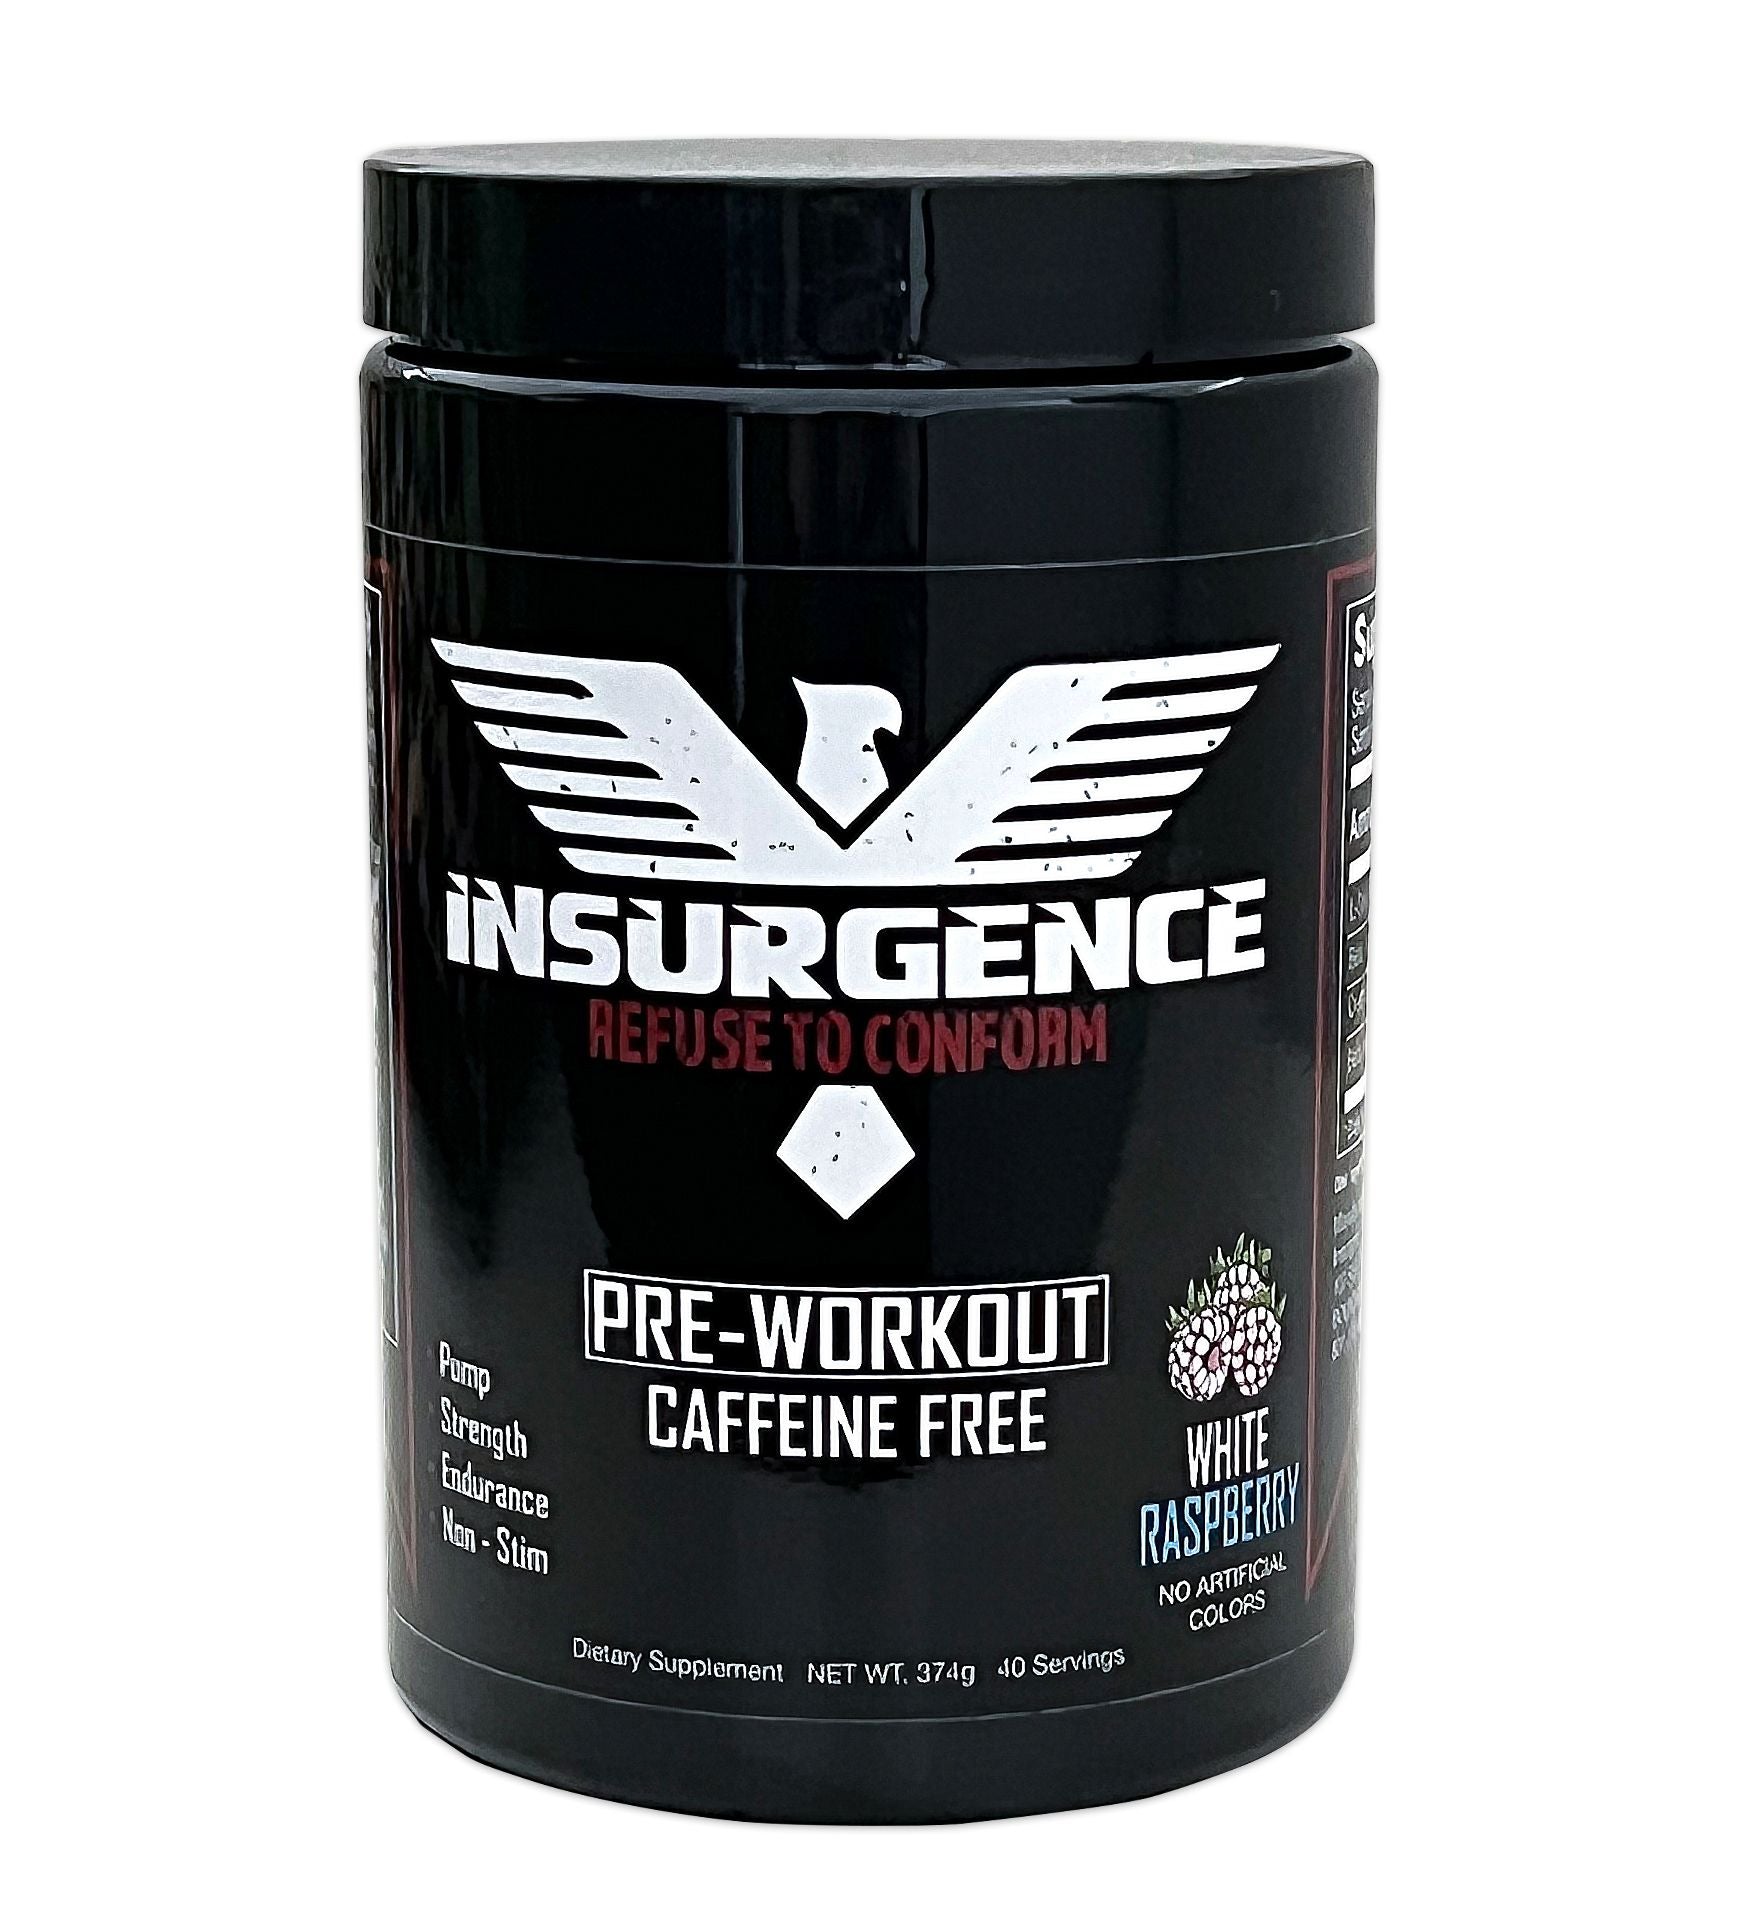 Insurgence Pre-Workout Caffeine Free